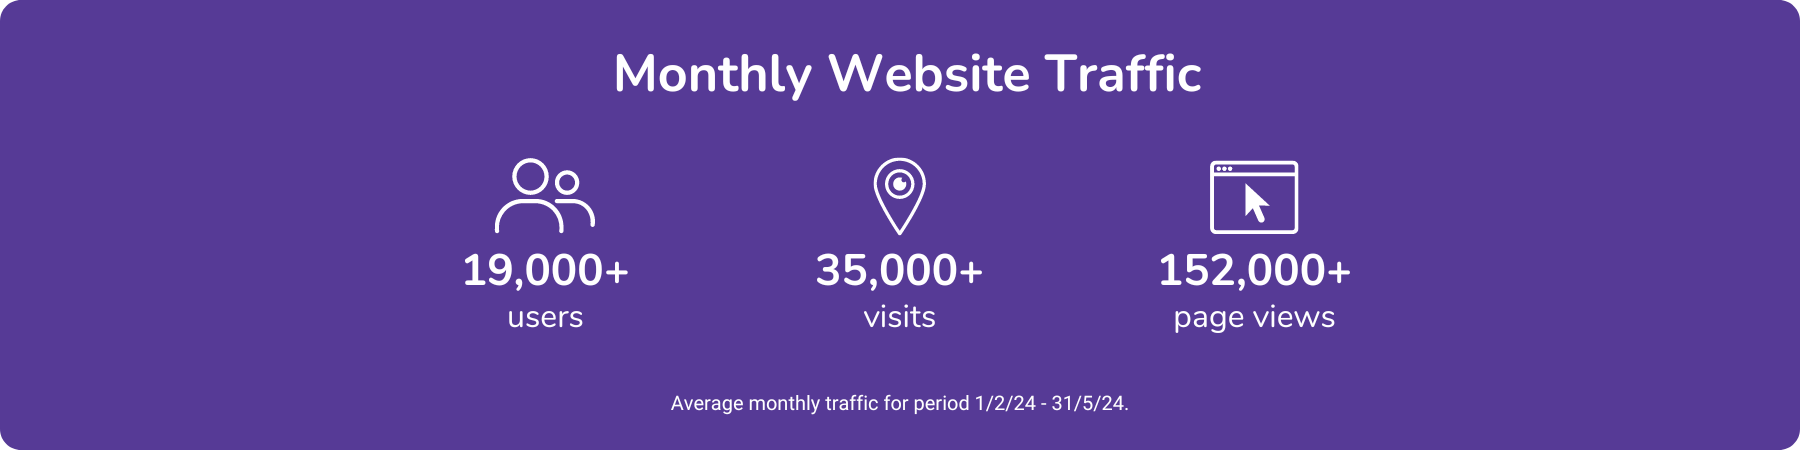 Website Traffic Statistics - 19000+ users, 35000+ visits, 152000+ page views